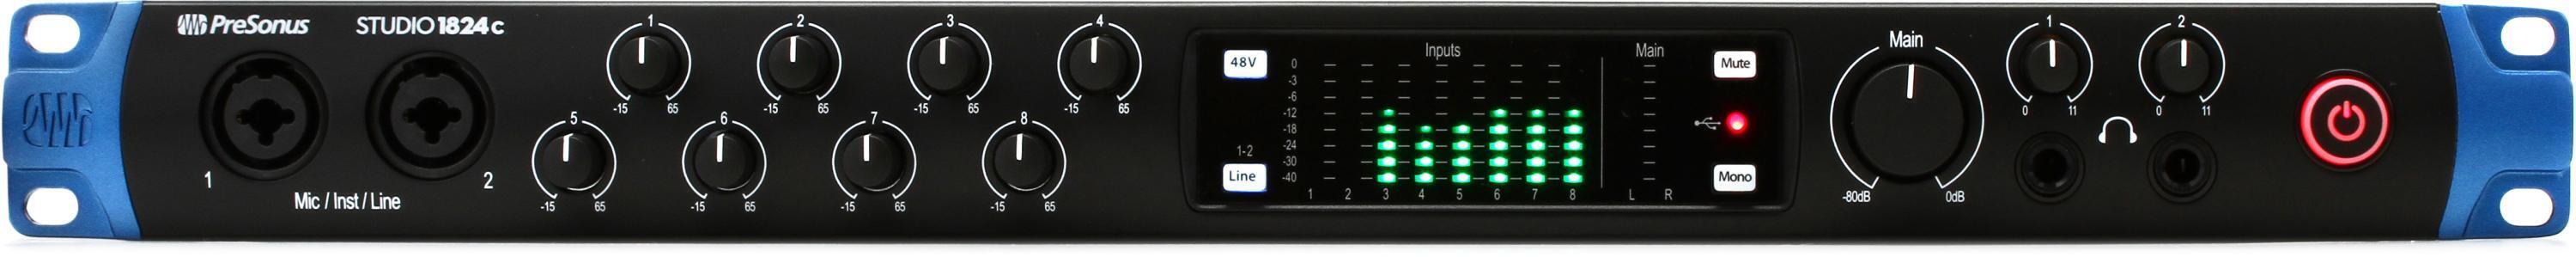 Steinberg UR816C USB Audio Interface | Sweetwater